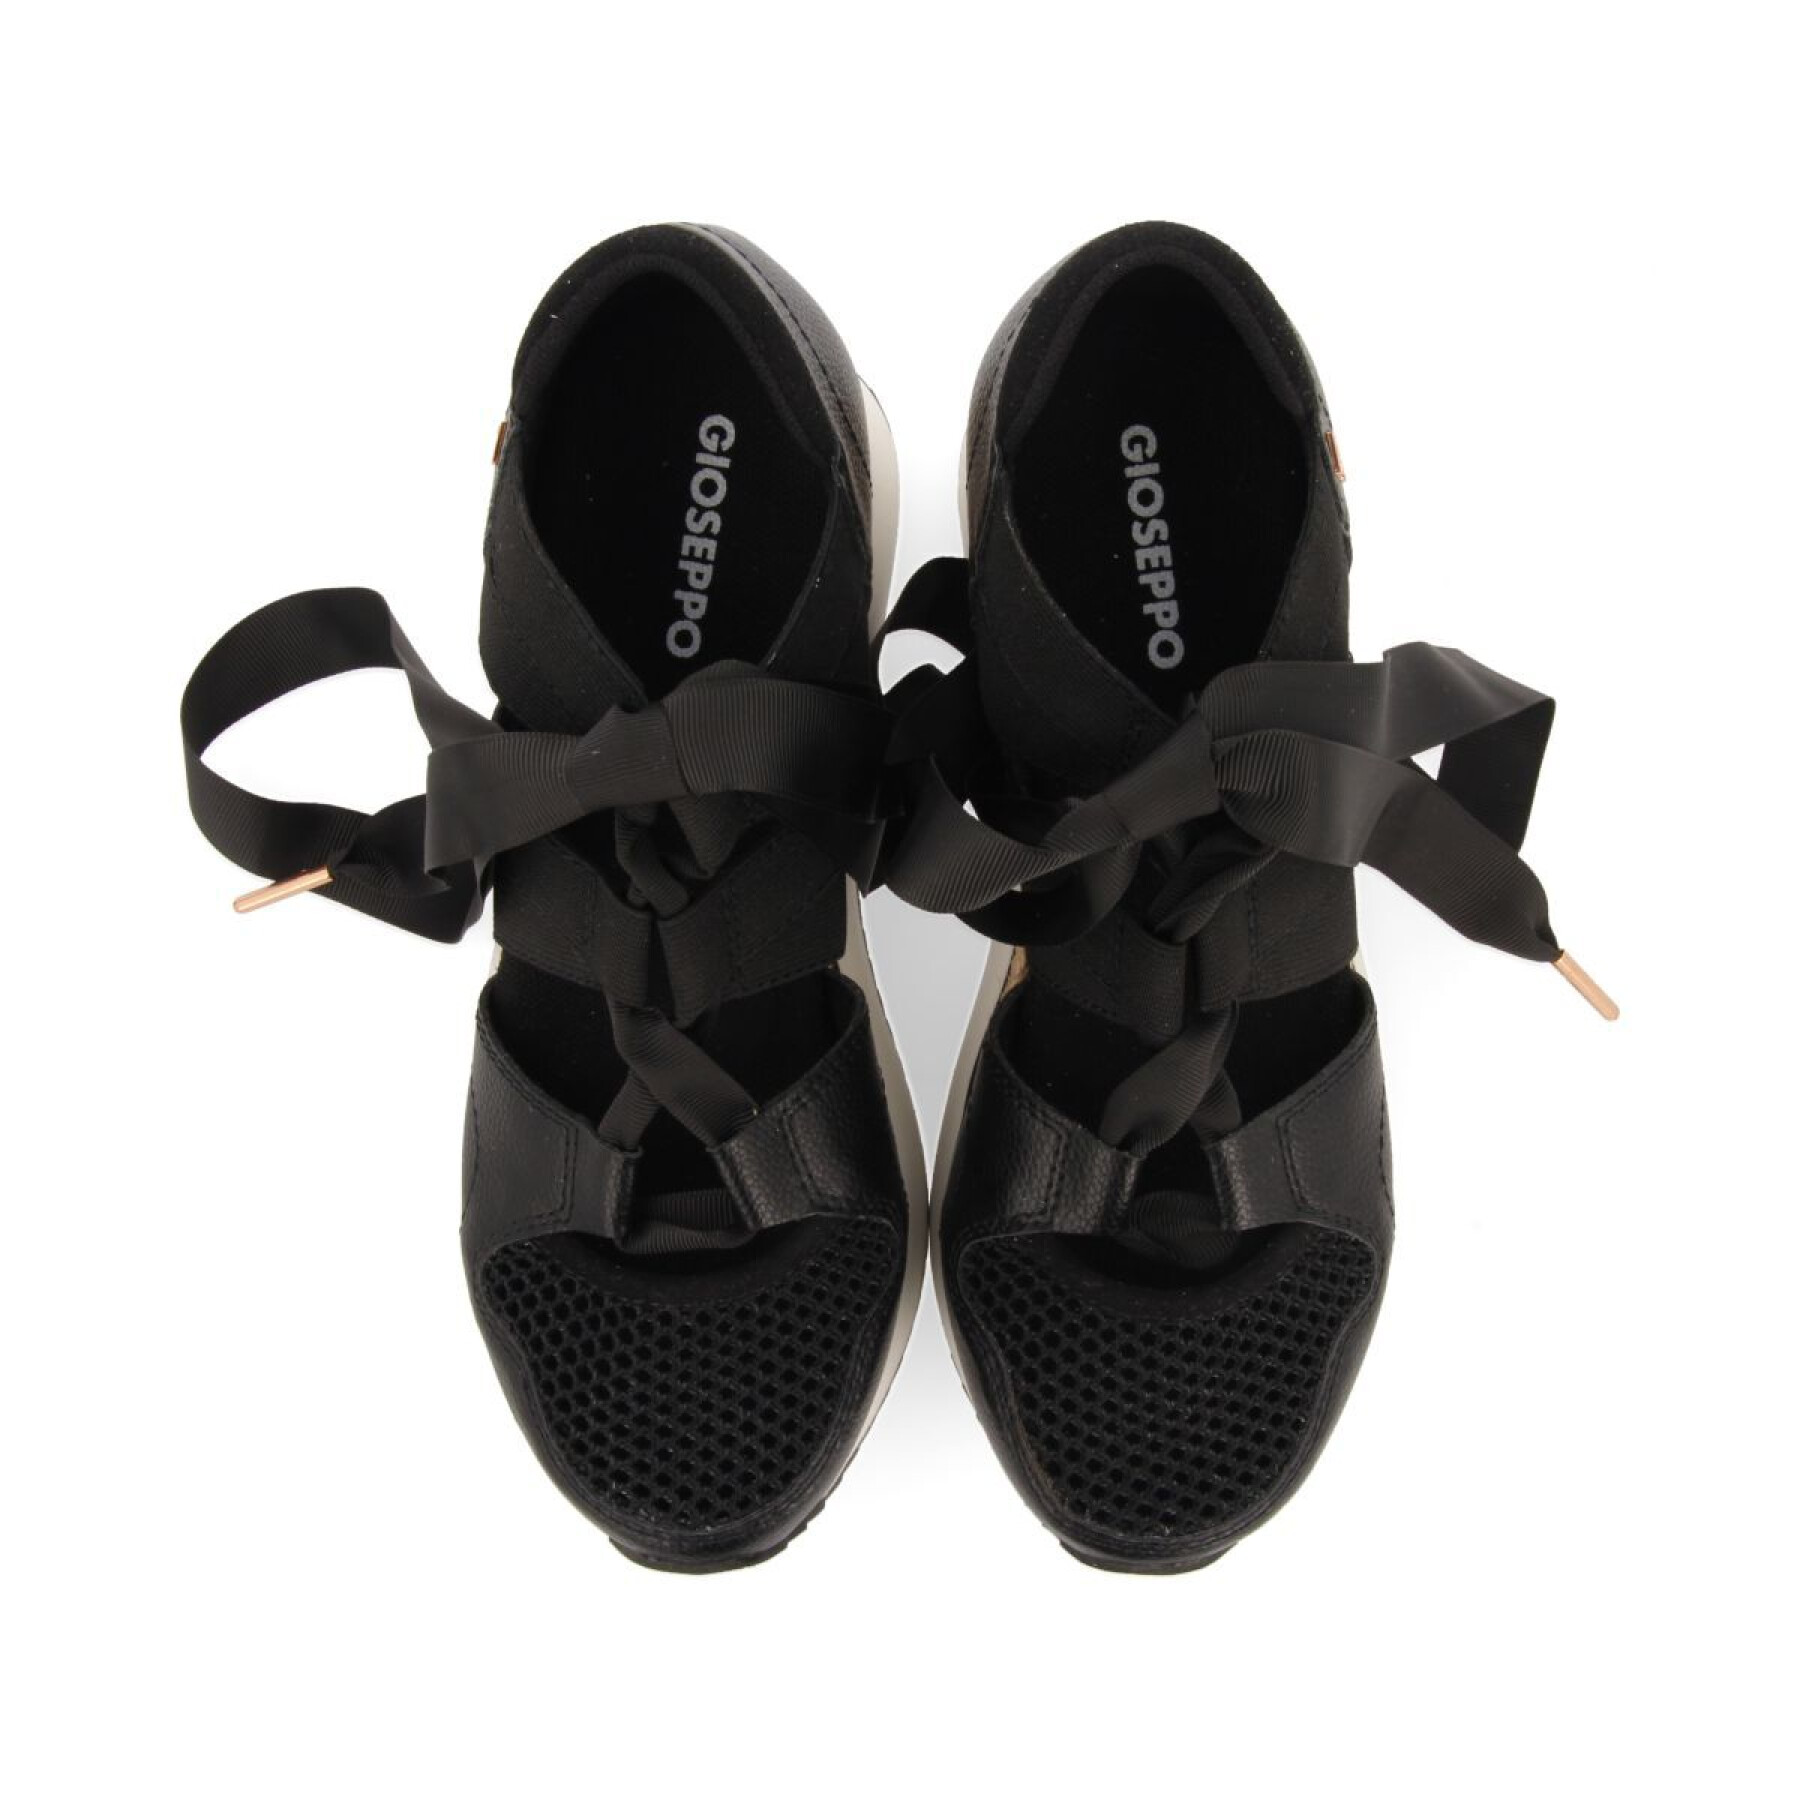 Women's wedge sandals Gioseppo Muir